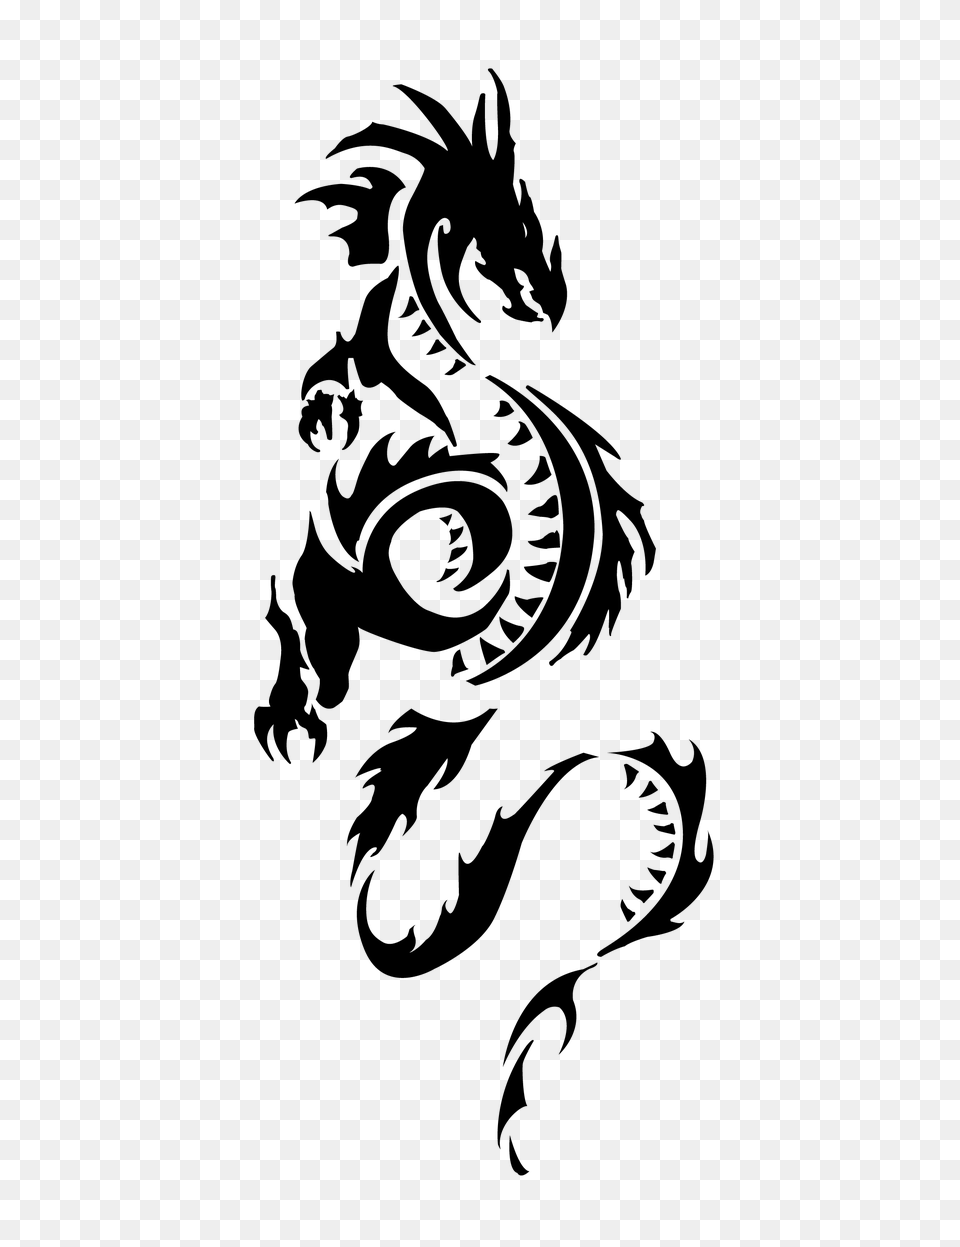 Dragon, Silhouette, Cross, Symbol Png Image